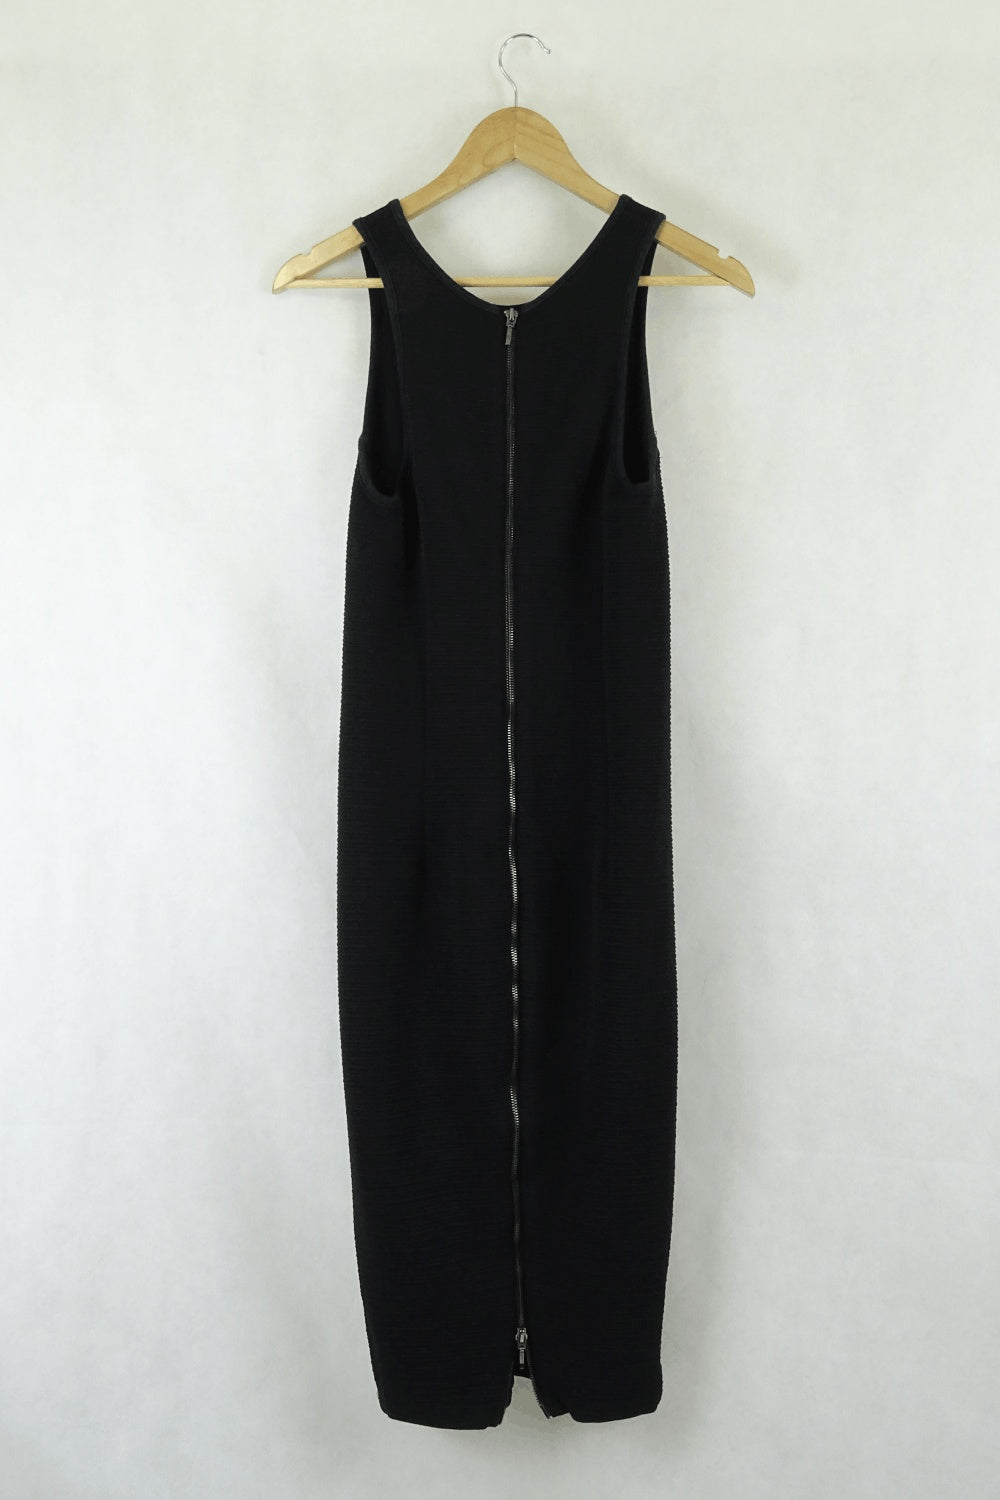 Sheike Black Dress 10